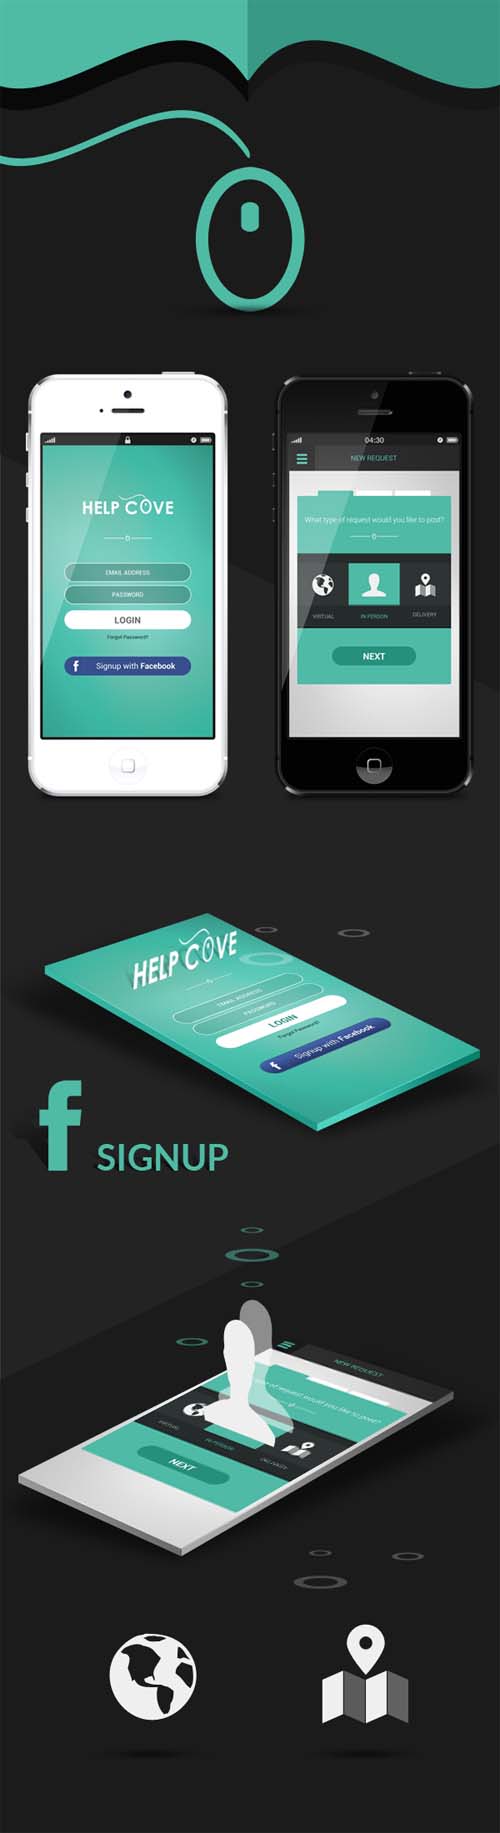 Helpcove Iphone Apps Design